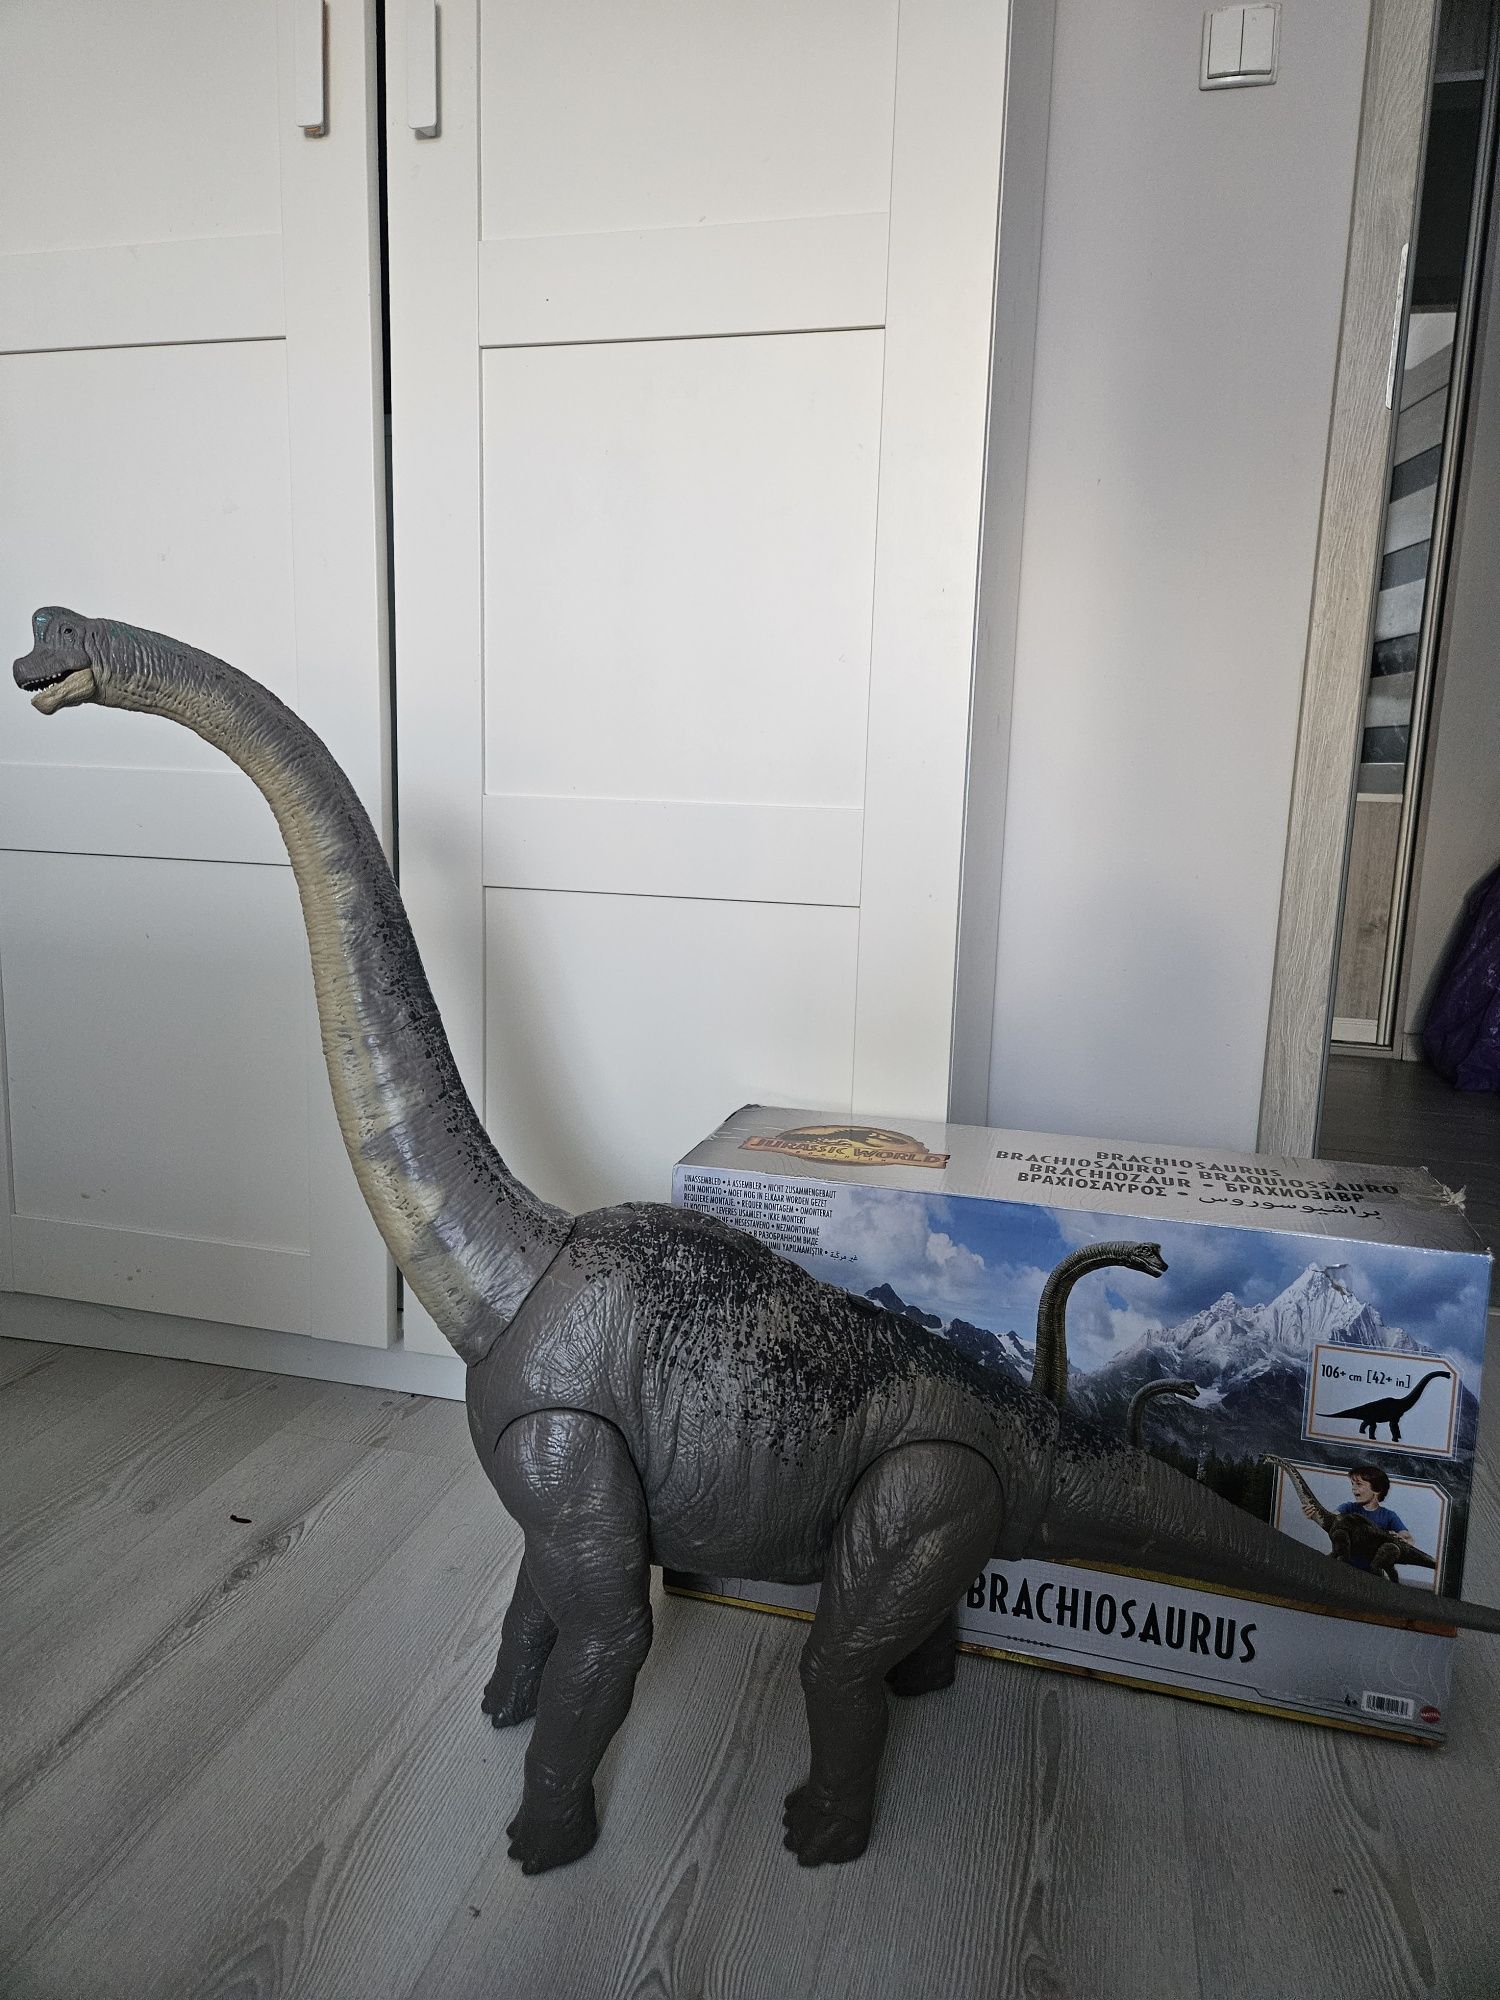 Brachiosaur Mattel jurassic world